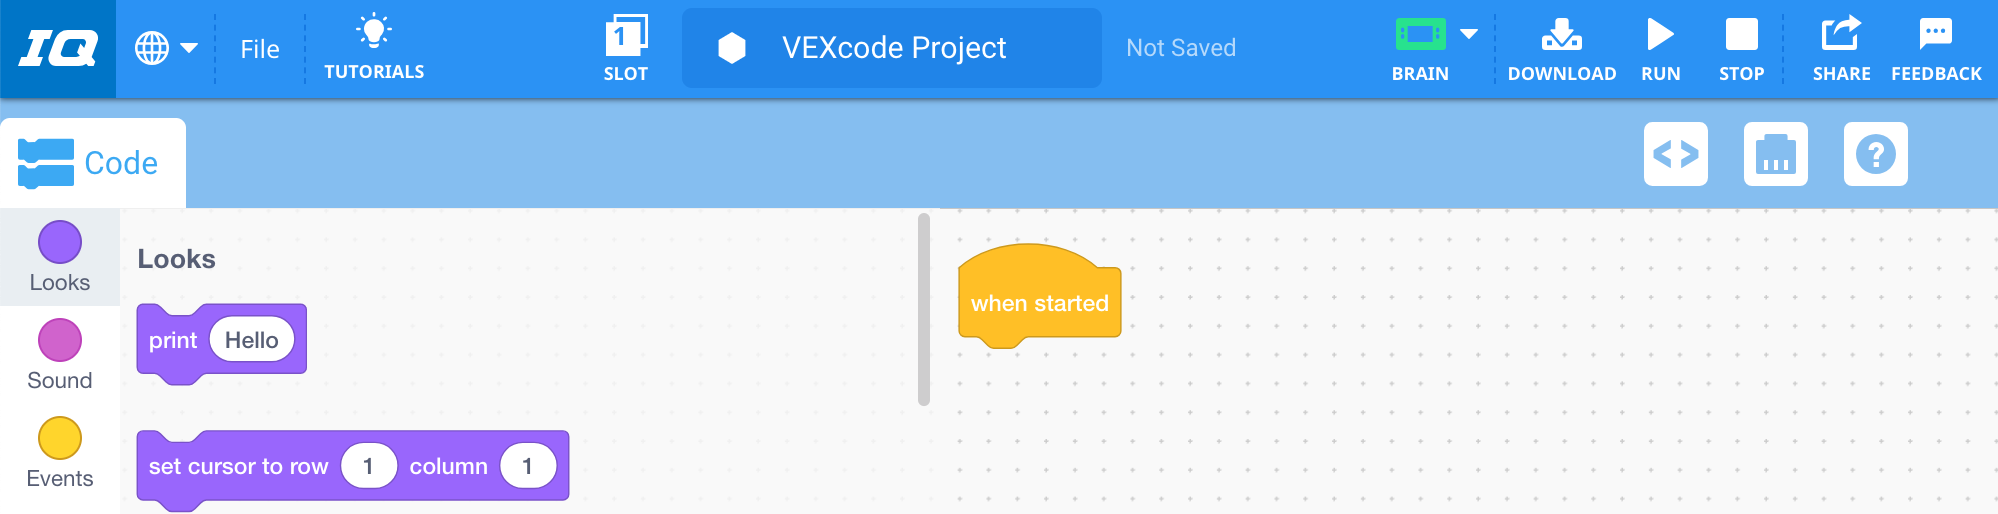 Launch VEXcode